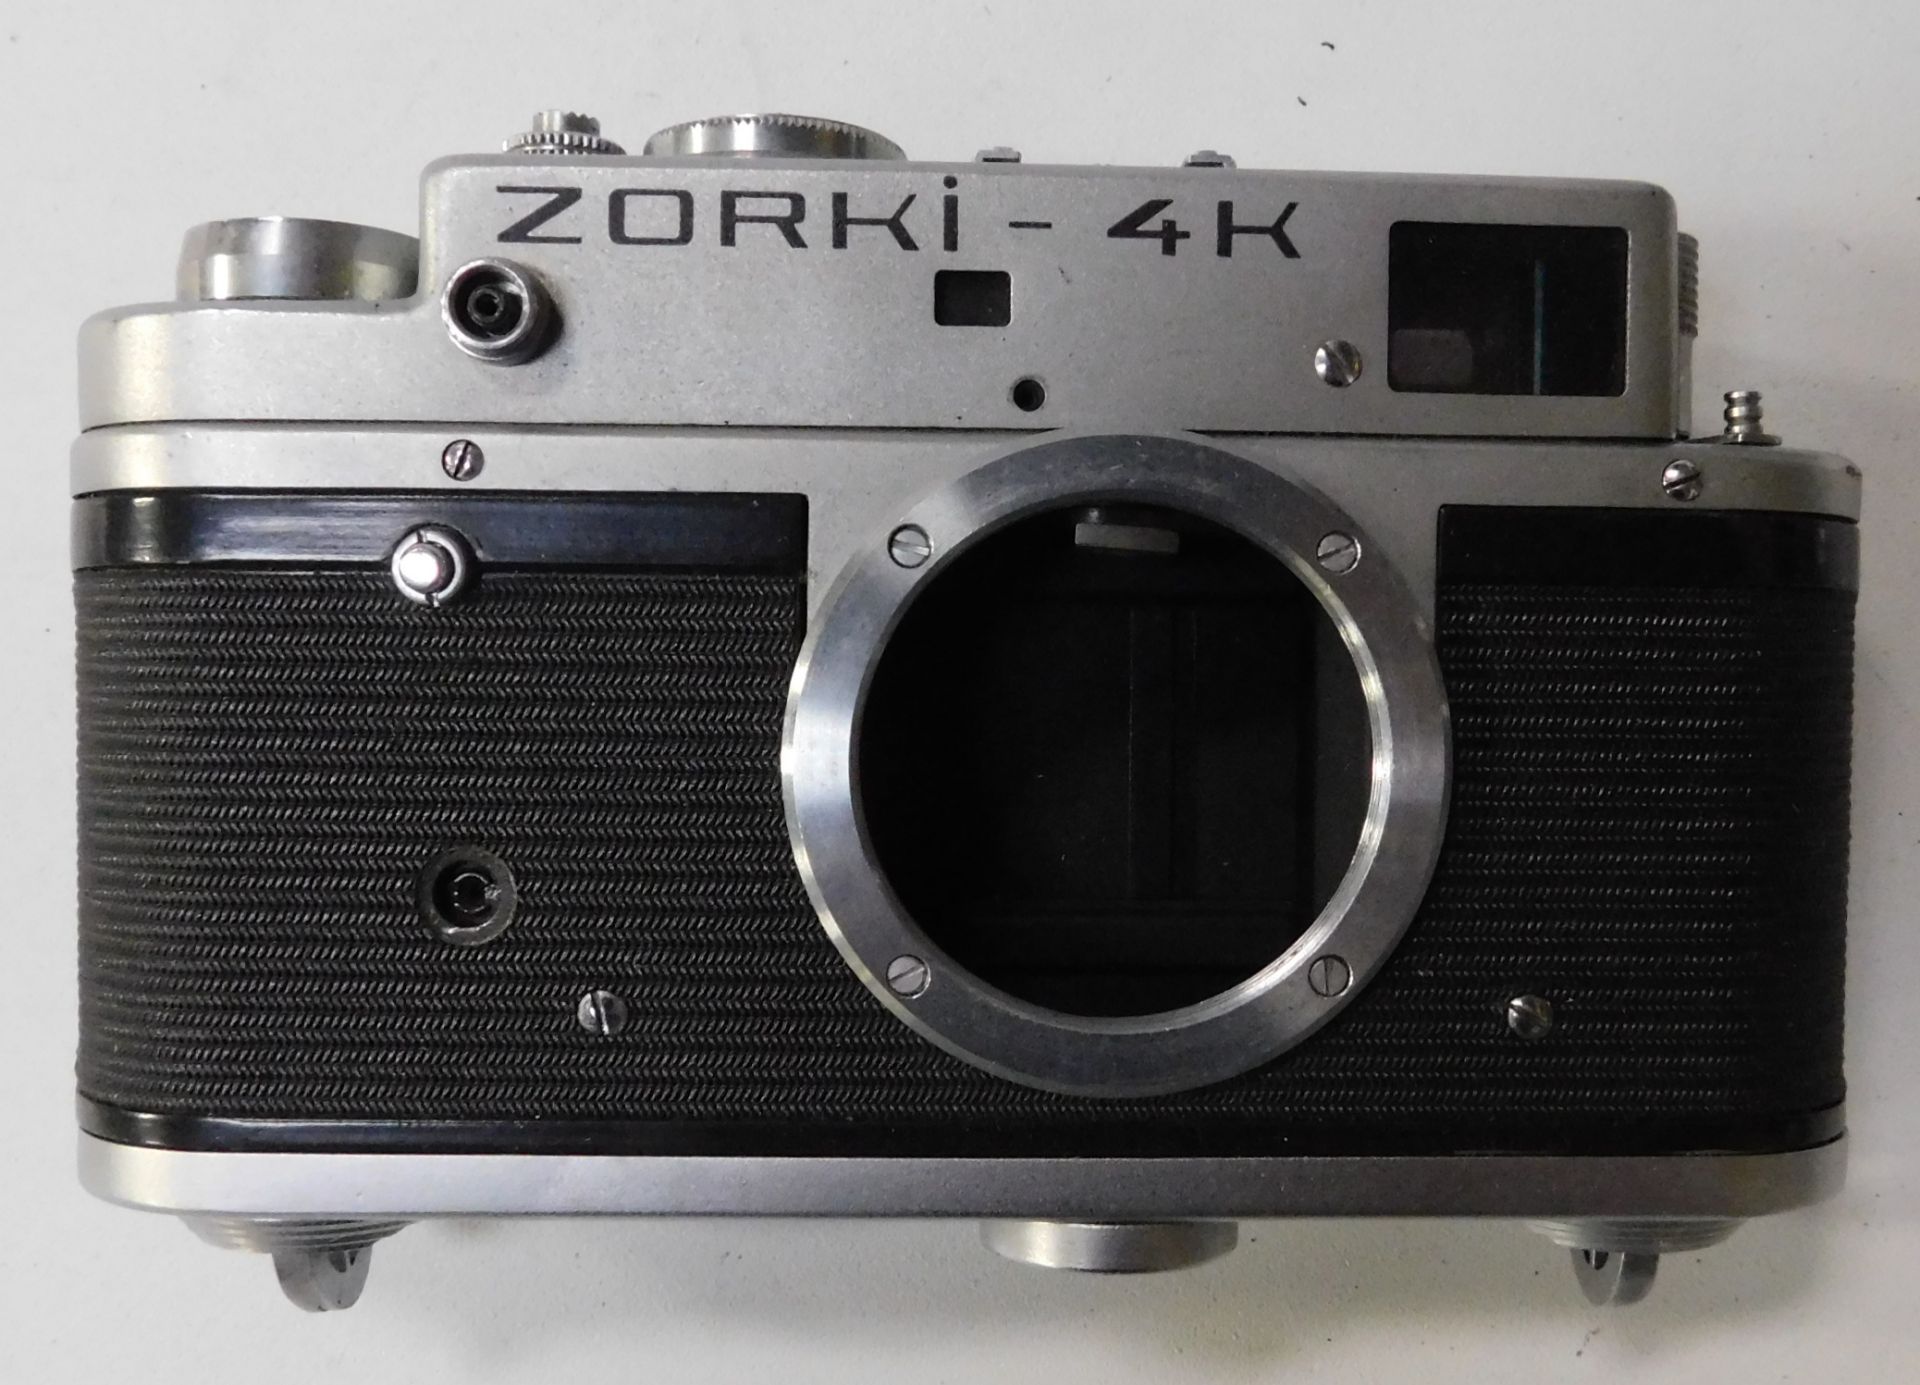 Zorki 4K Film Camera, Number 76780614, Yashica IC Lynx 5000E Film Camera, Number 010522 & Cosina - Image 4 of 7